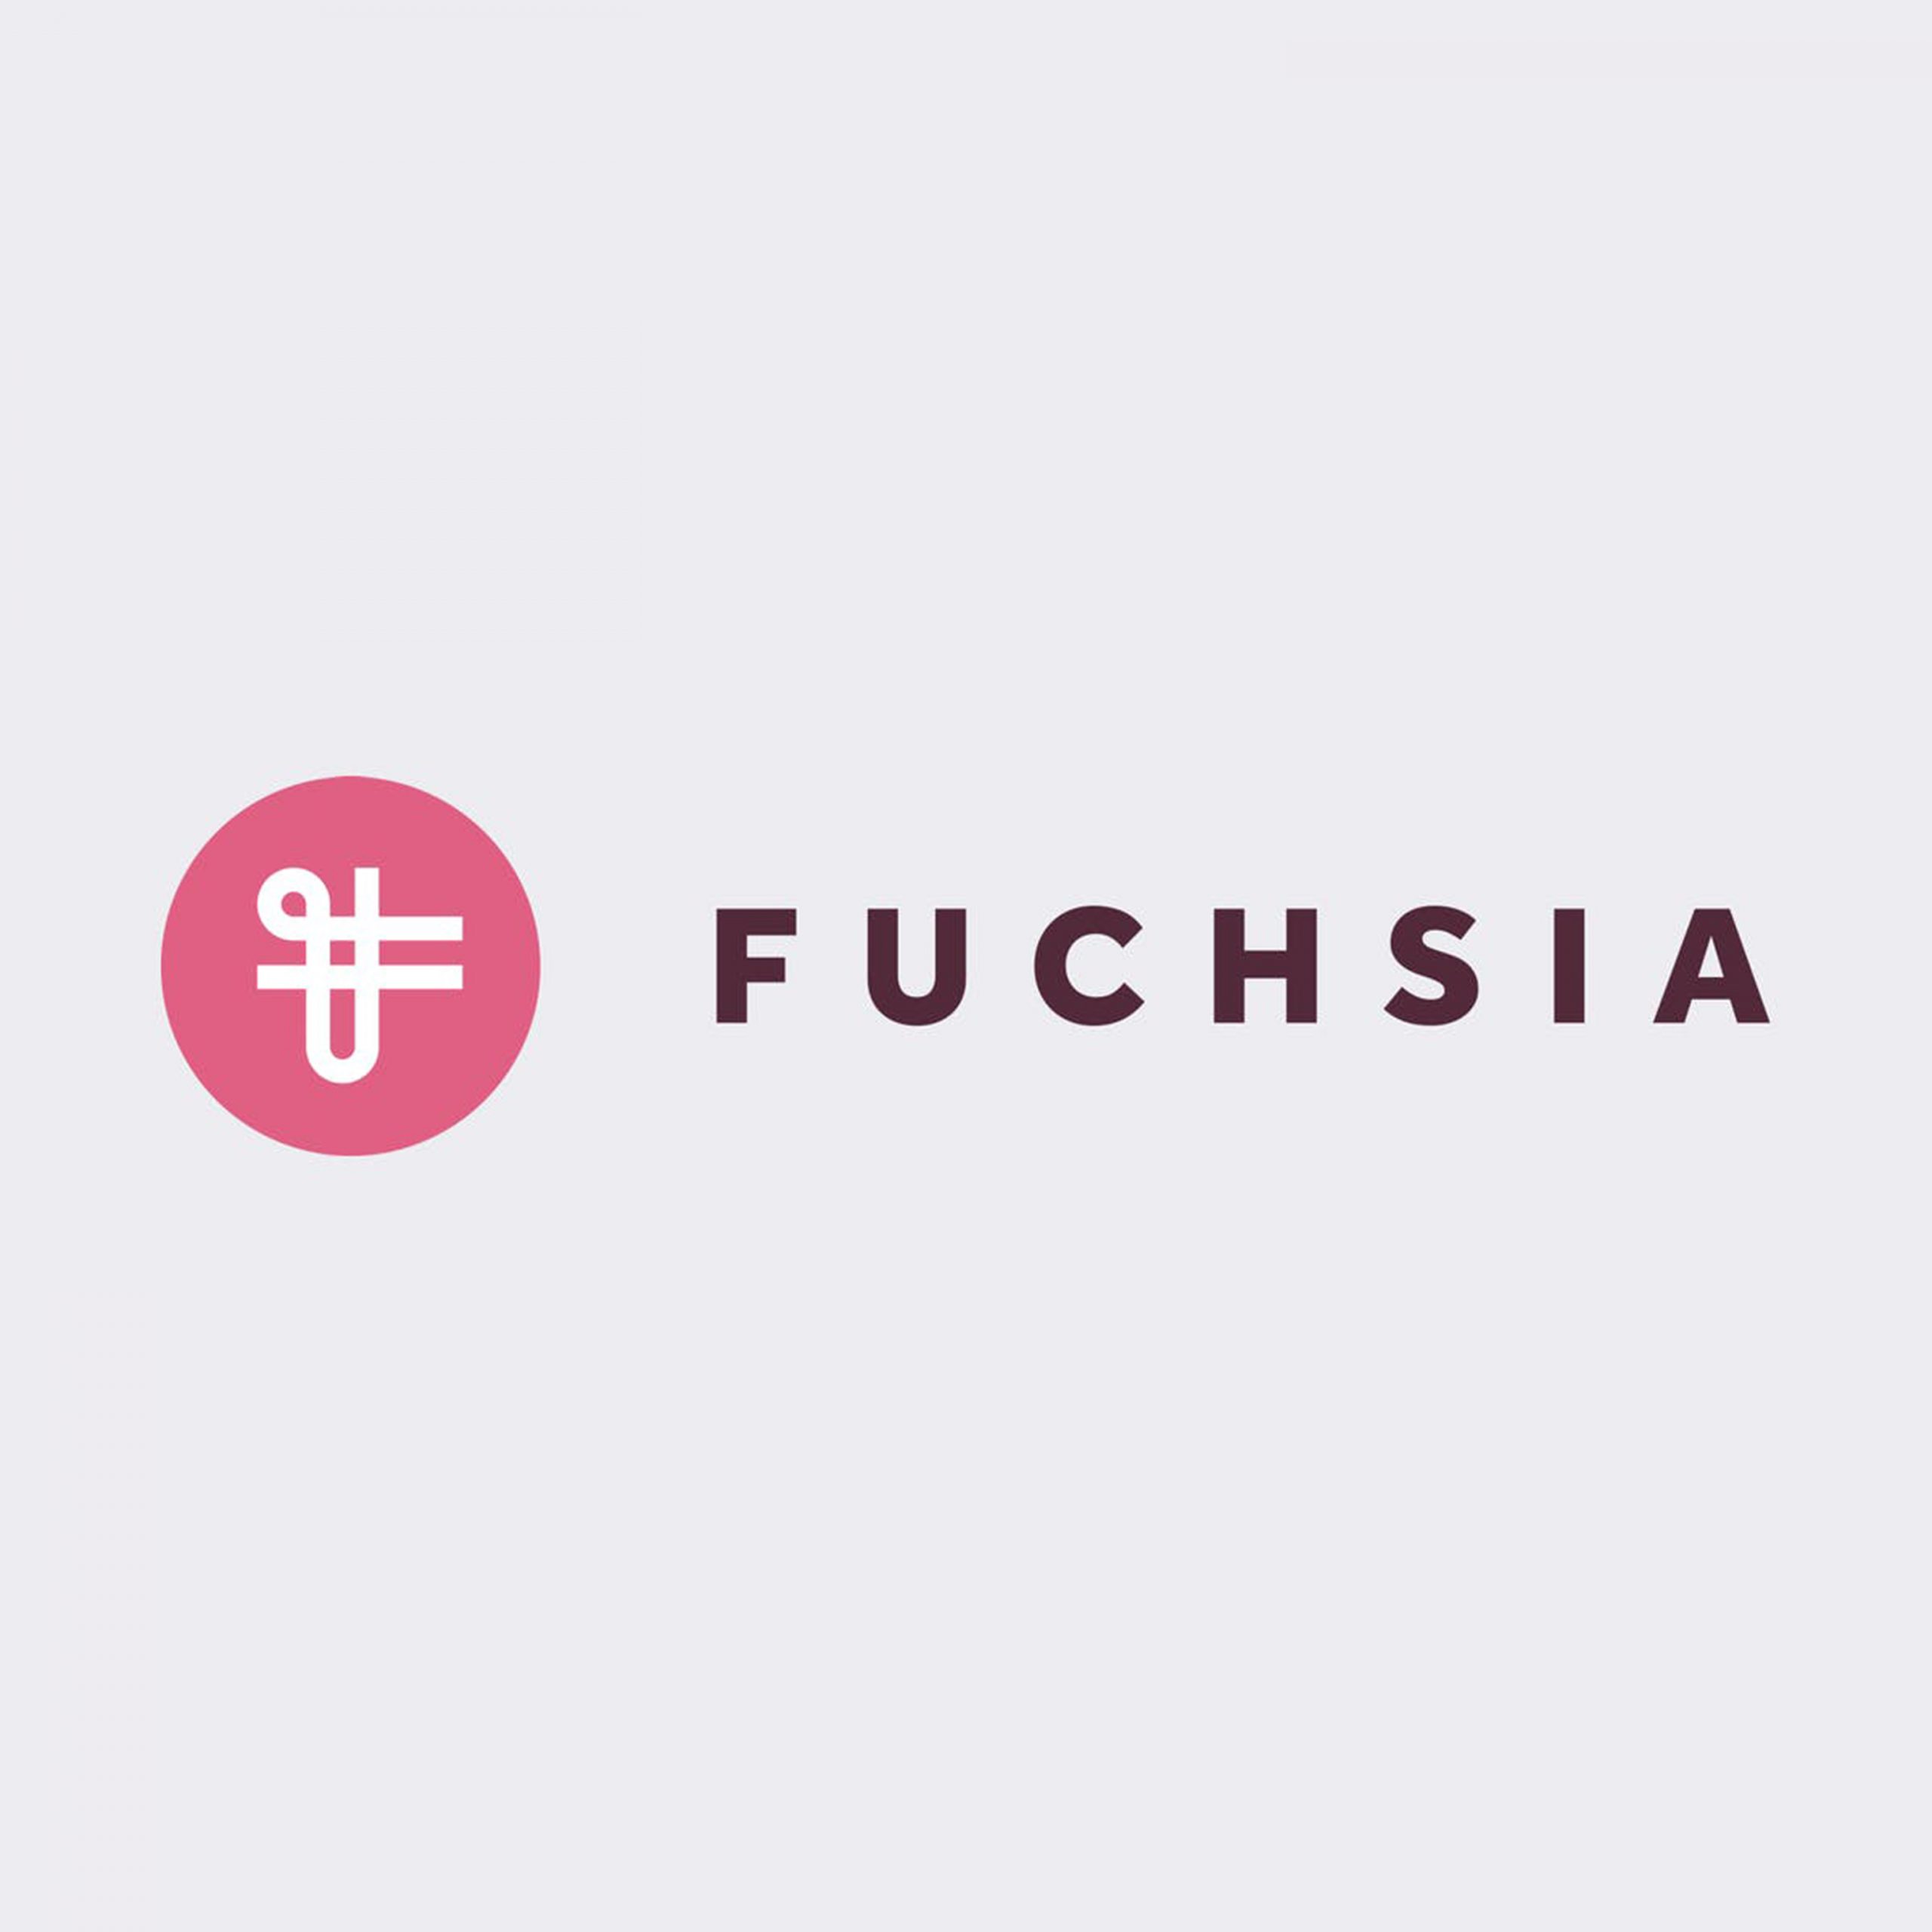 Fuchsia Urban Thai - Coming Soon in UAE